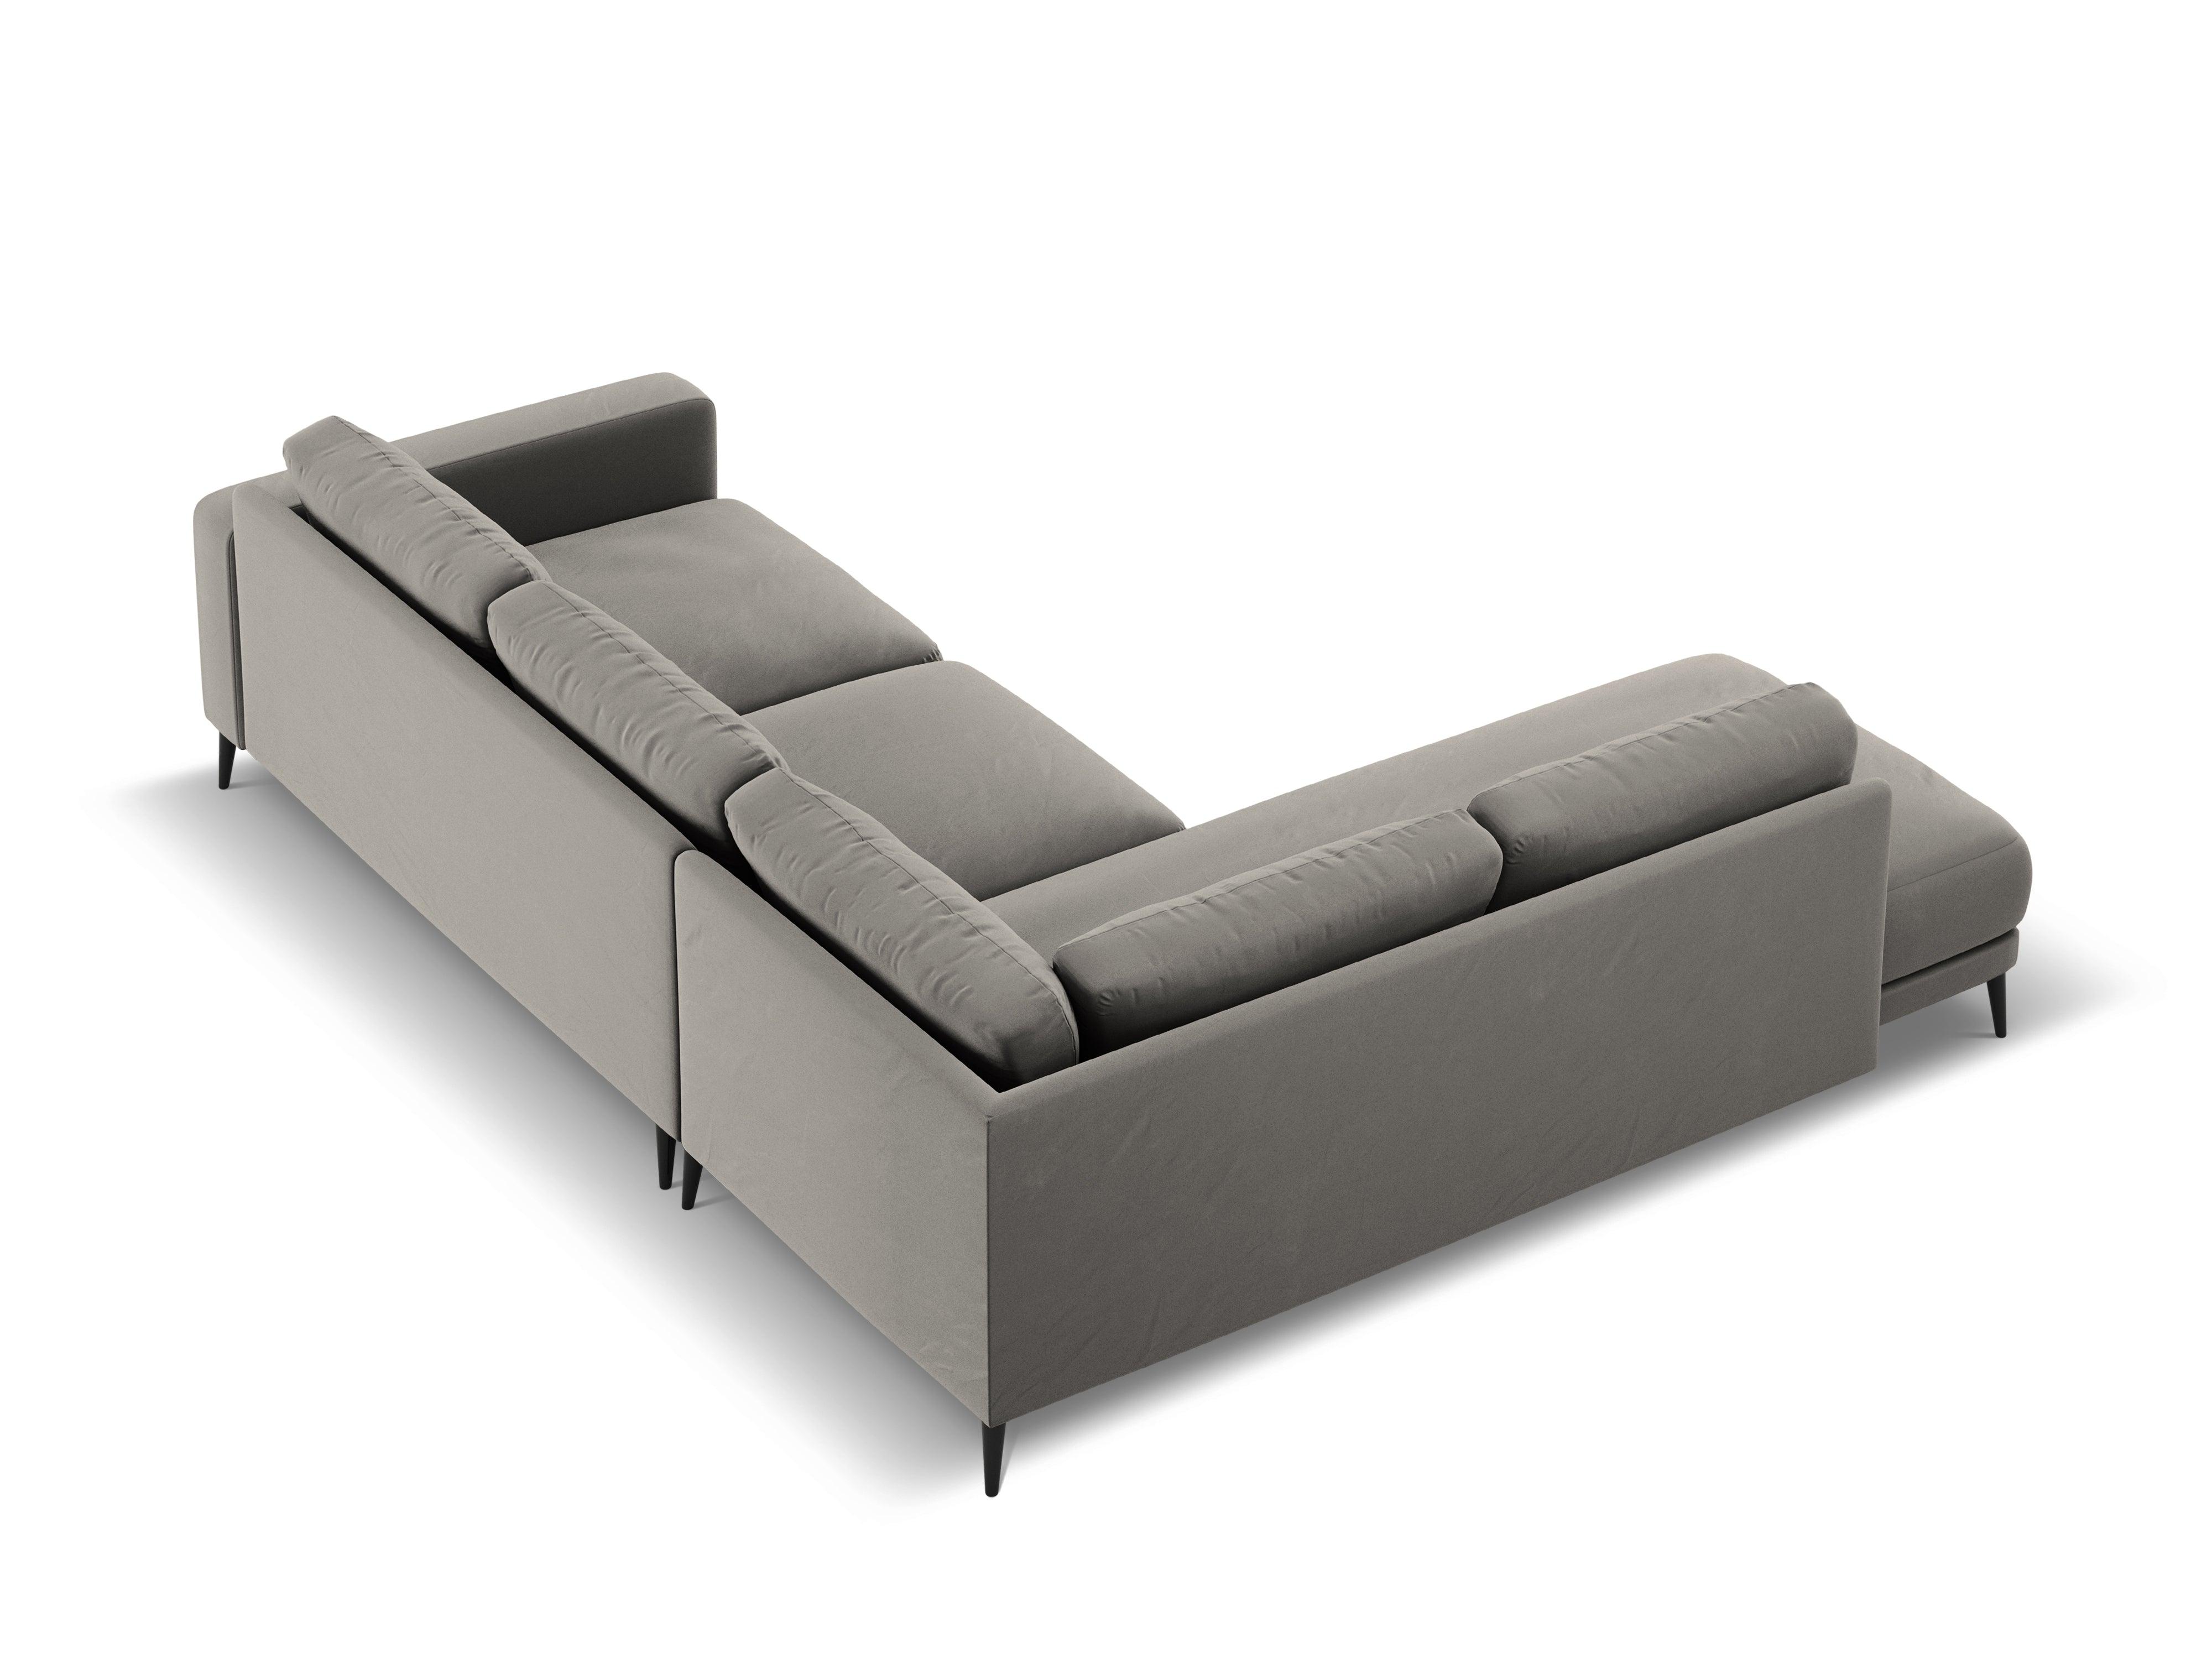 Velvet Left Corner Sofa, "Kylie", 4 Seats, 251x185x80
Made in Europe, Micadoni, Eye on Design